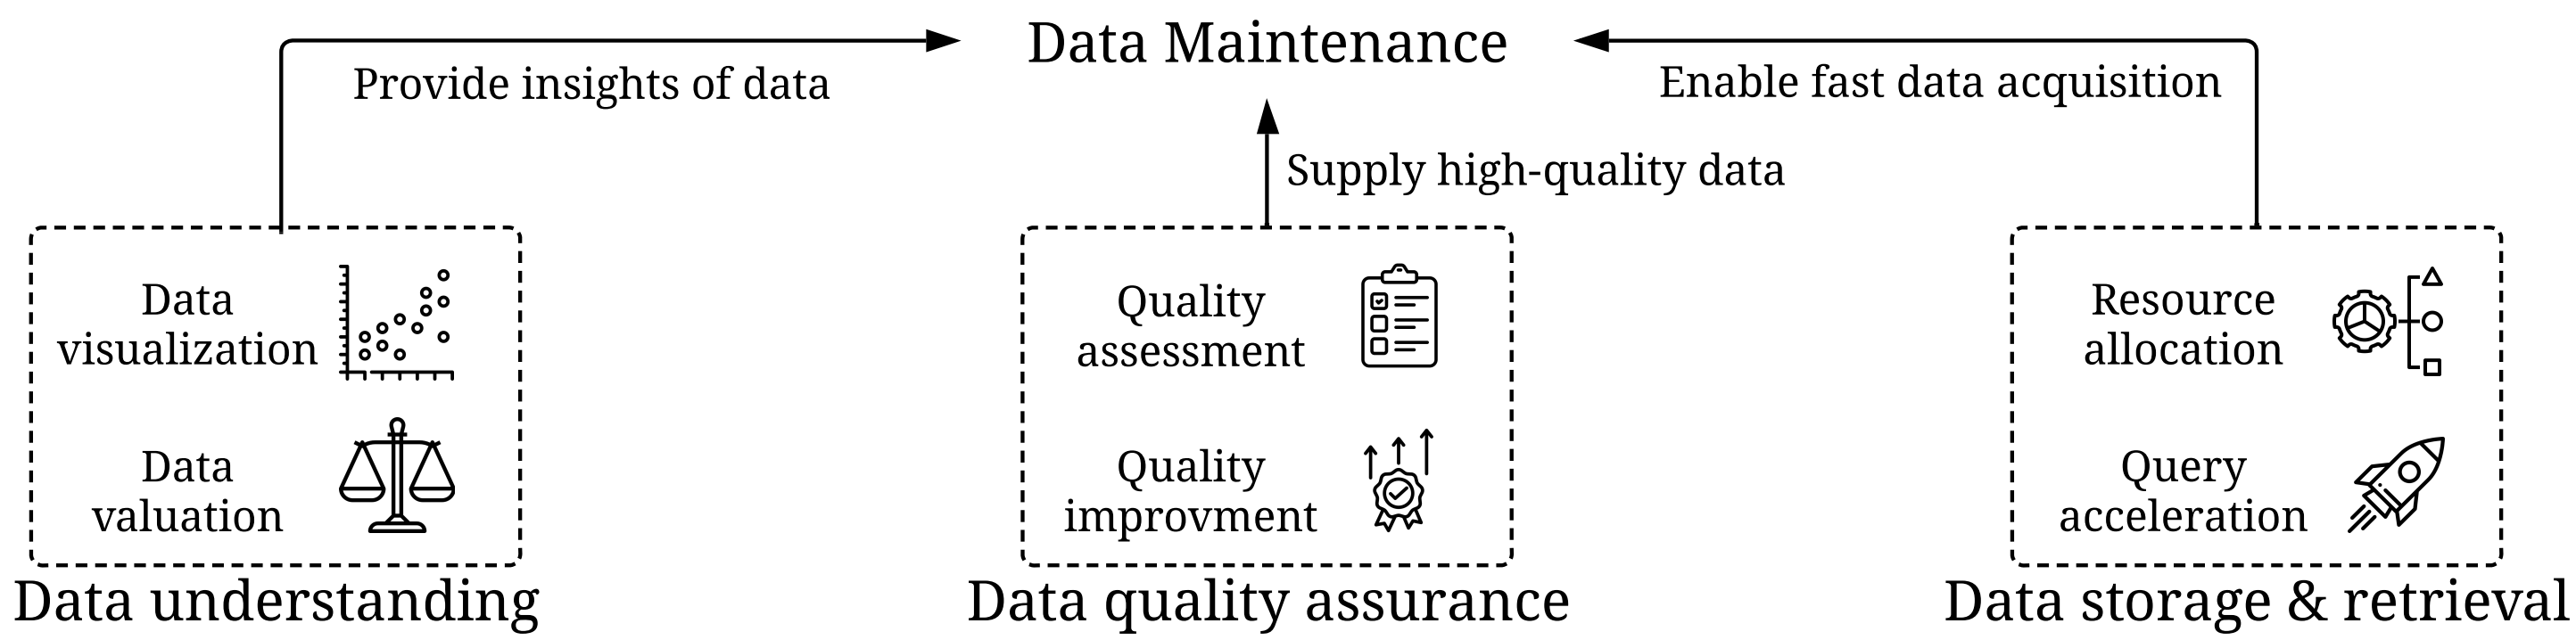 data-maintenance